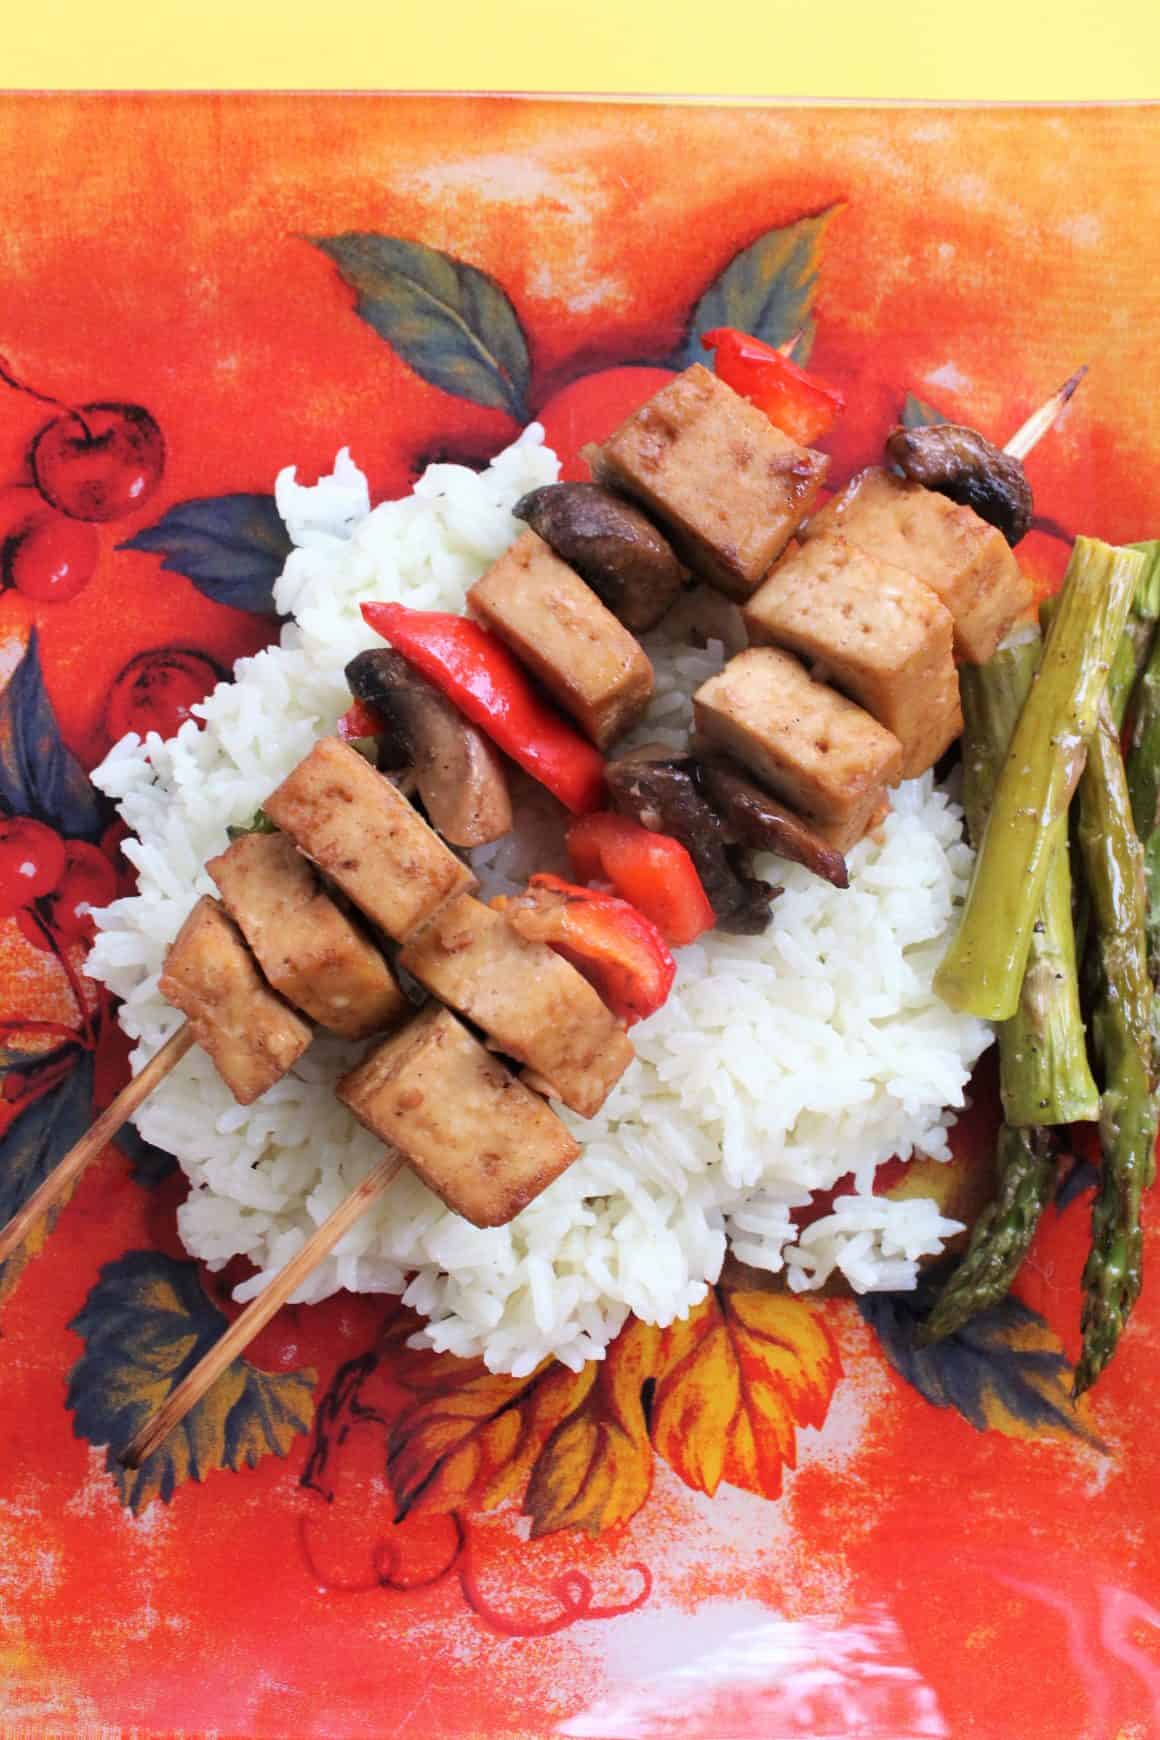 Brochettes de tofu et marinade à l’asiatique